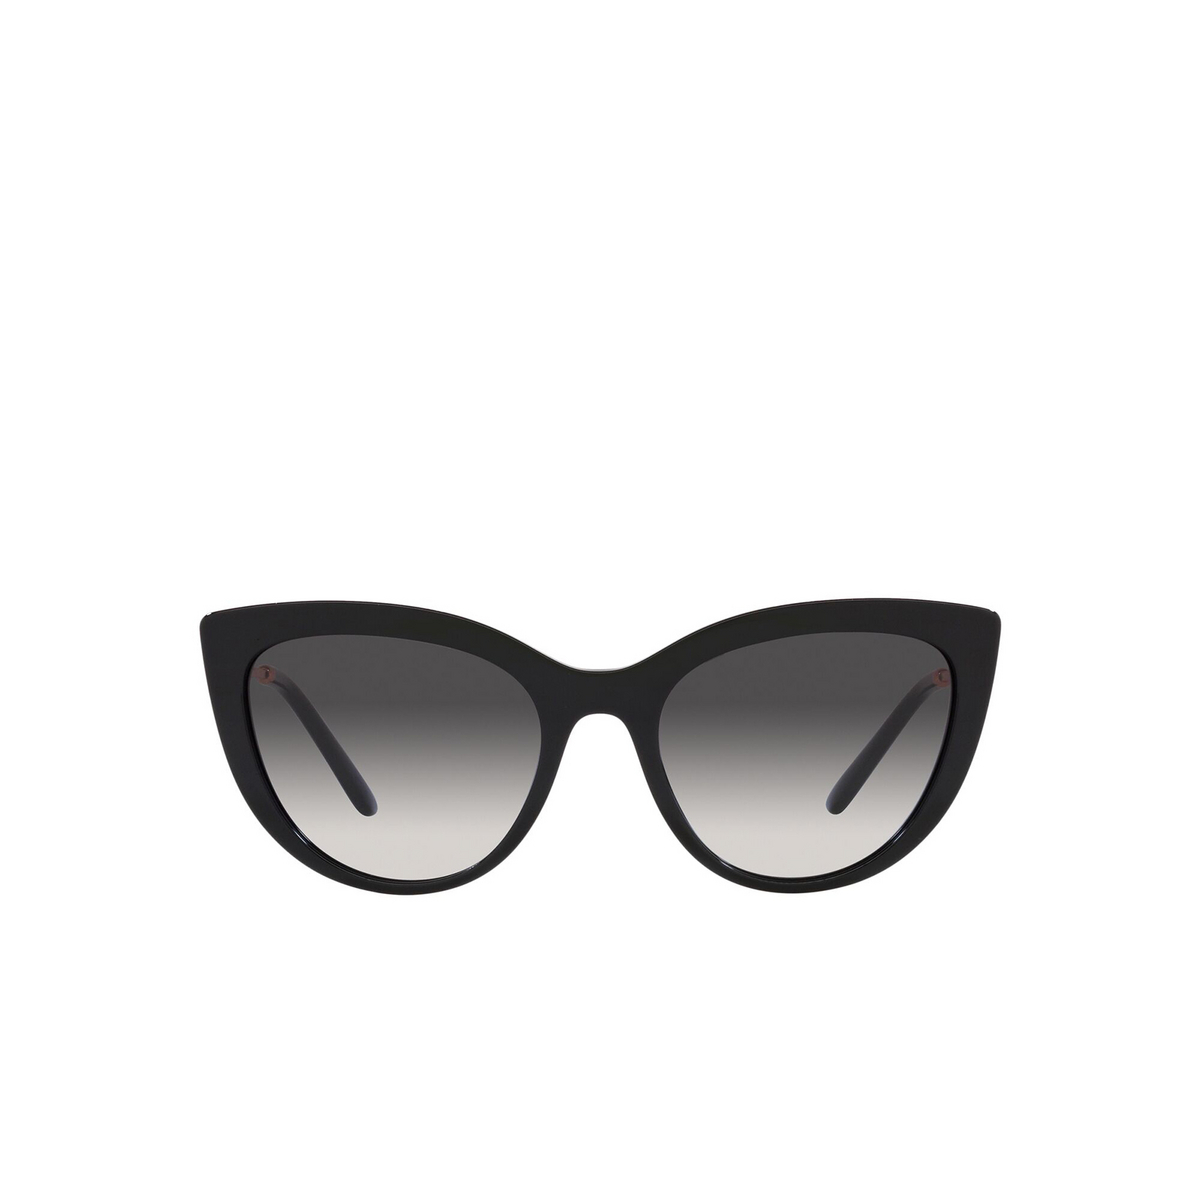 Dolce & Gabbana® Butterfly Sunglasses: DG4408 color Black 501/8G - front view.